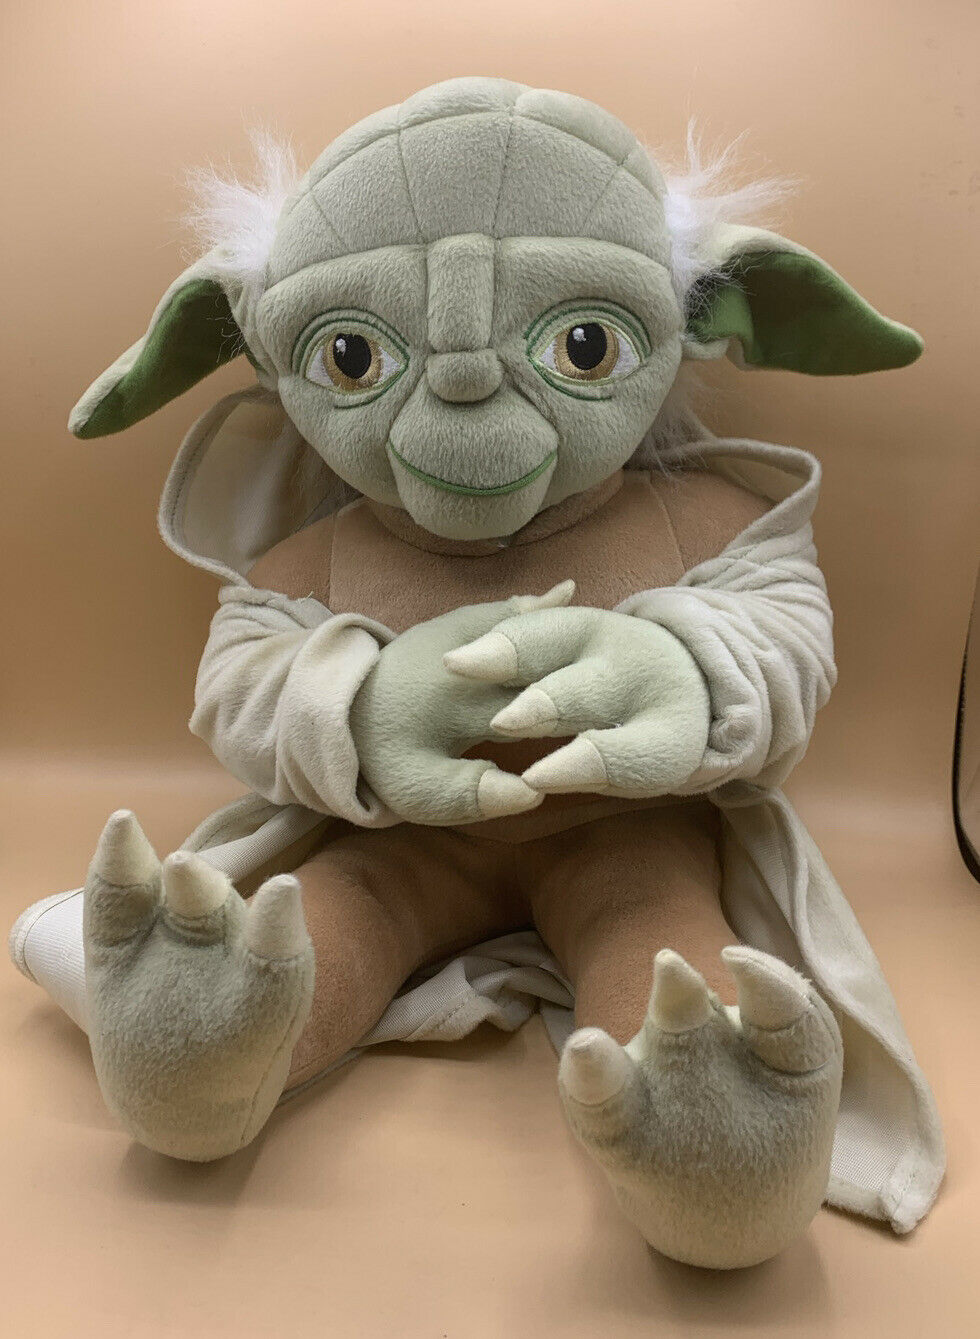 Yoda Star Wars Jay Franco Plush Lucas Film Stuffed Animal With Robe And Hood